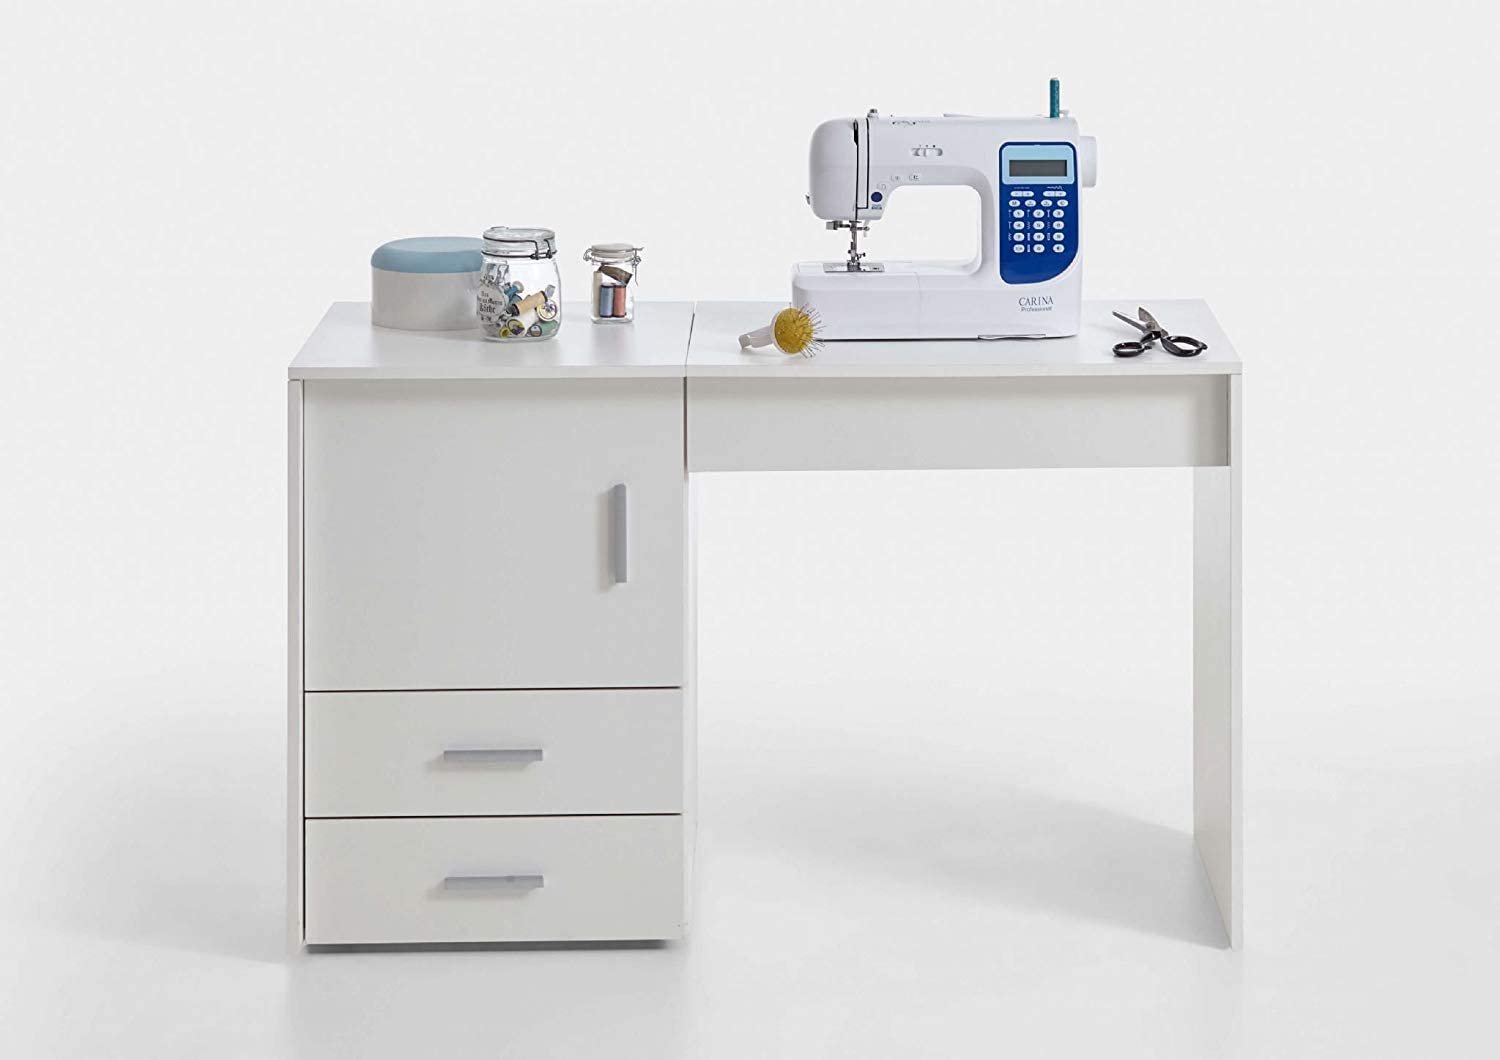 Mesas para máquinas de coser